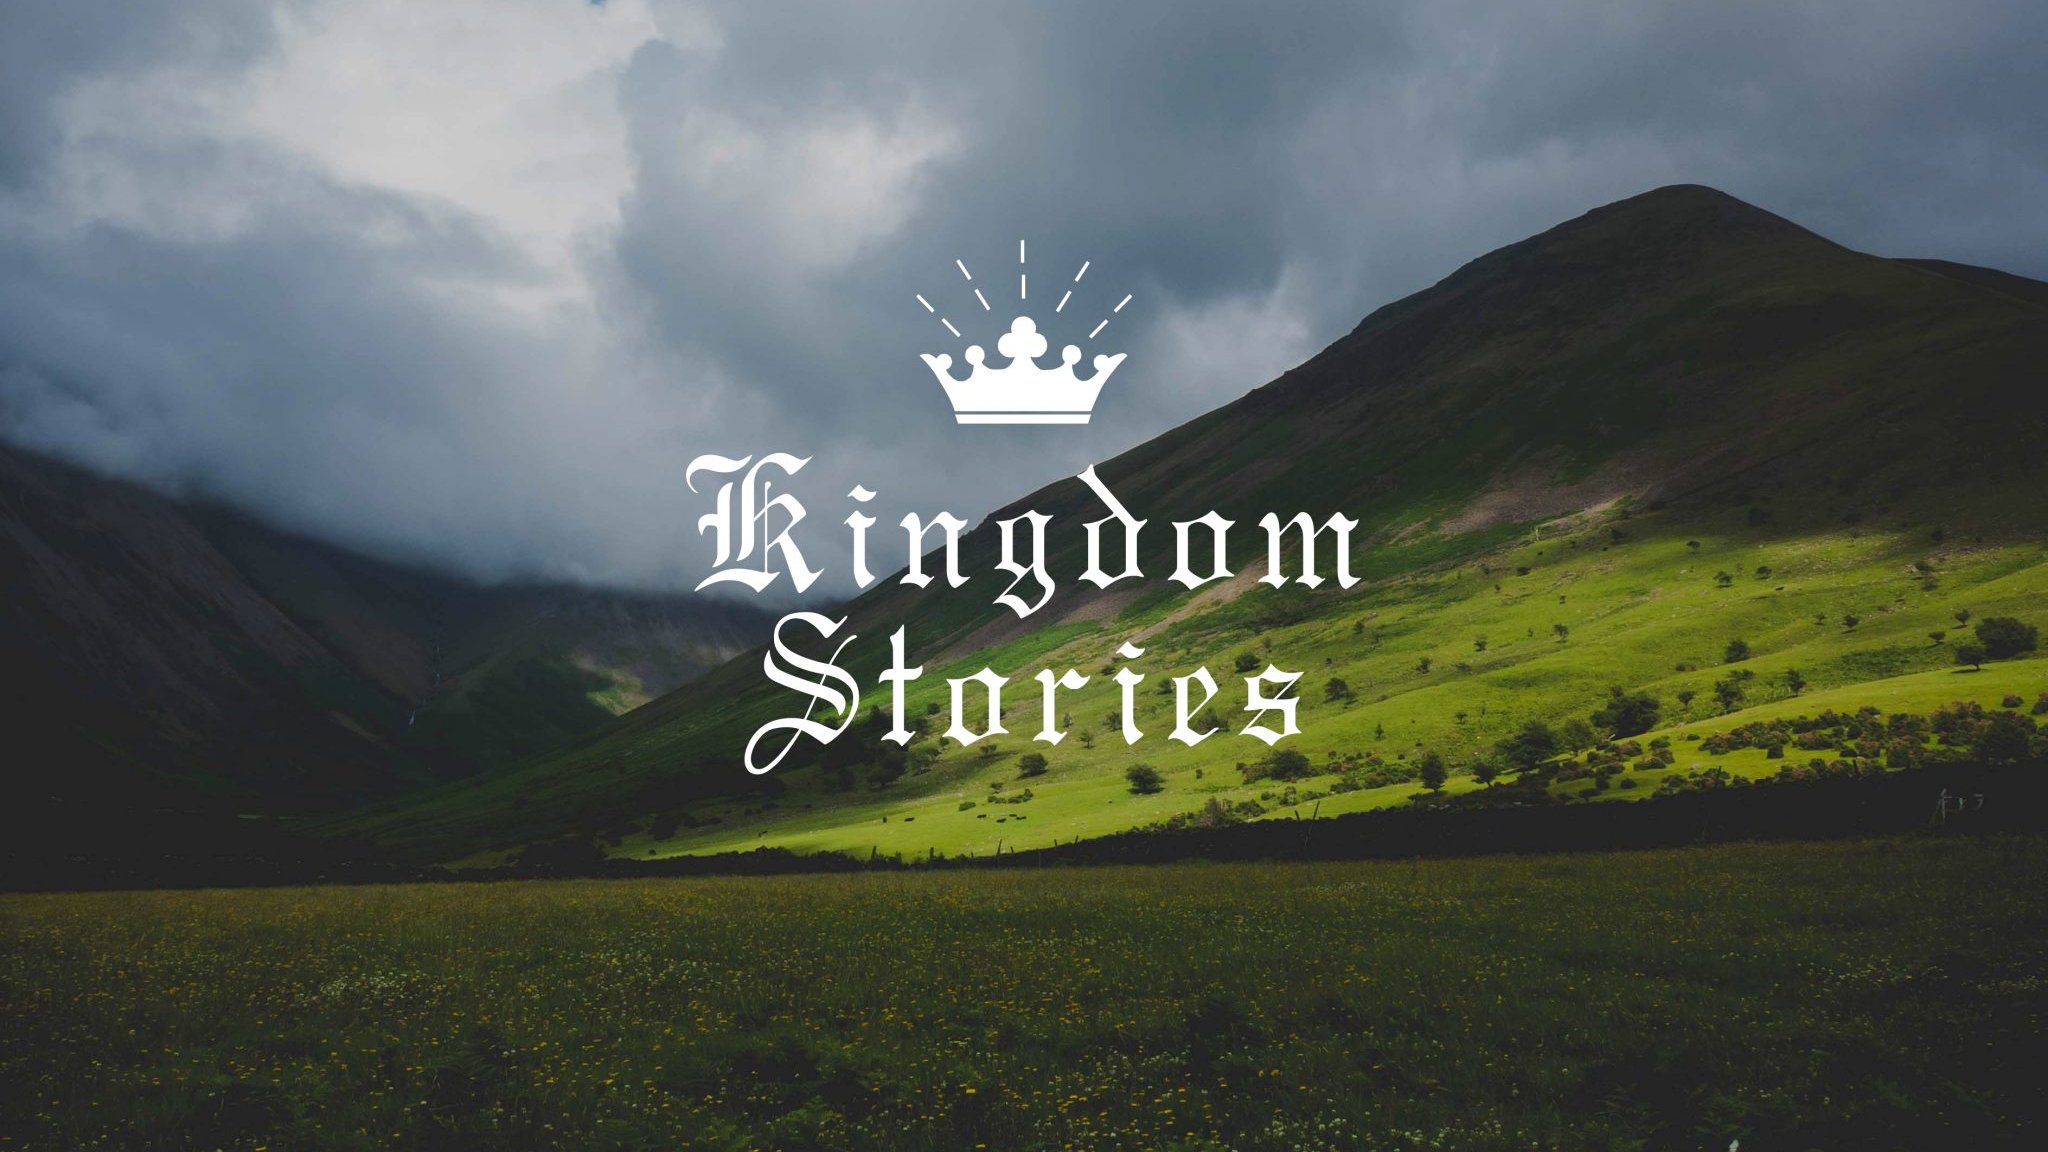 Kingdom Stories